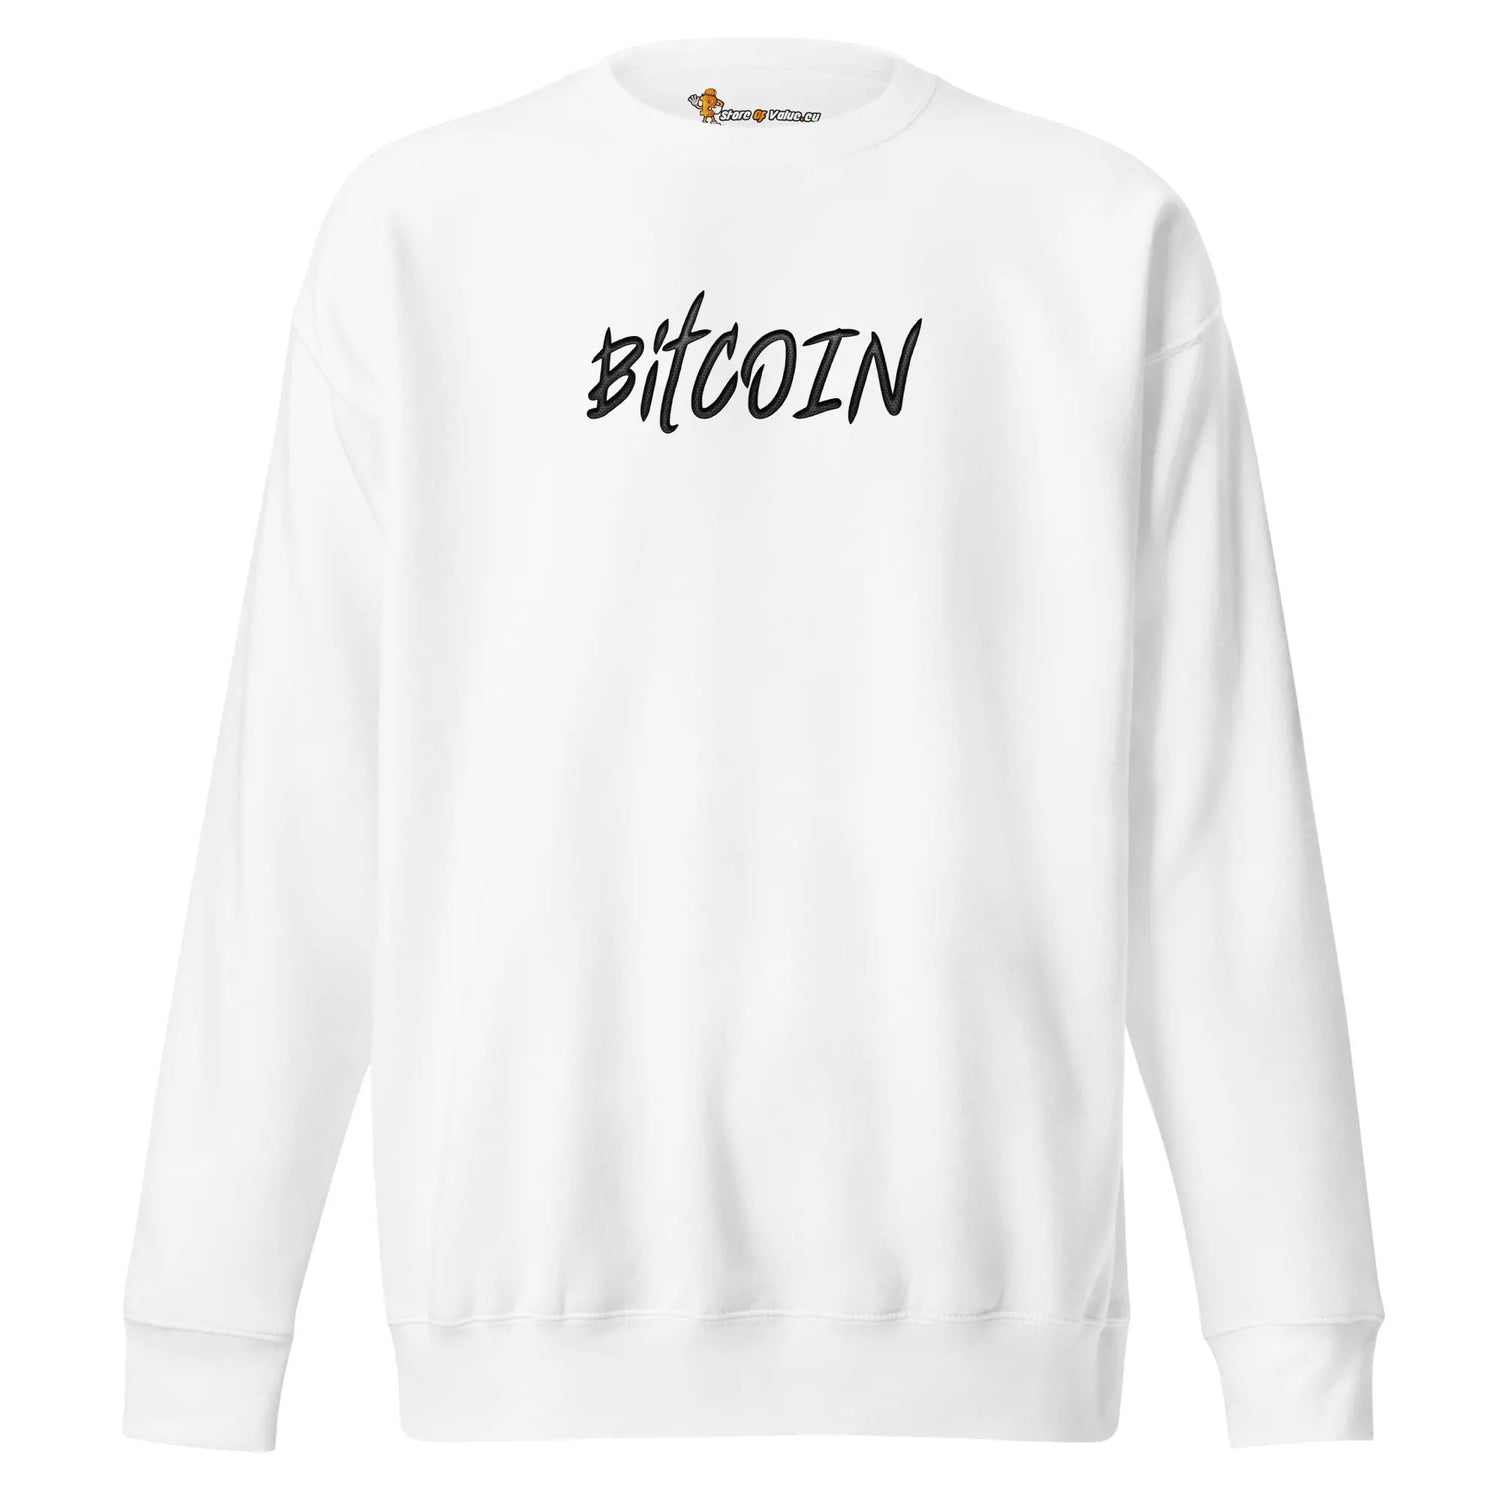 Bitcoin Crewneck Sweater Store of Value